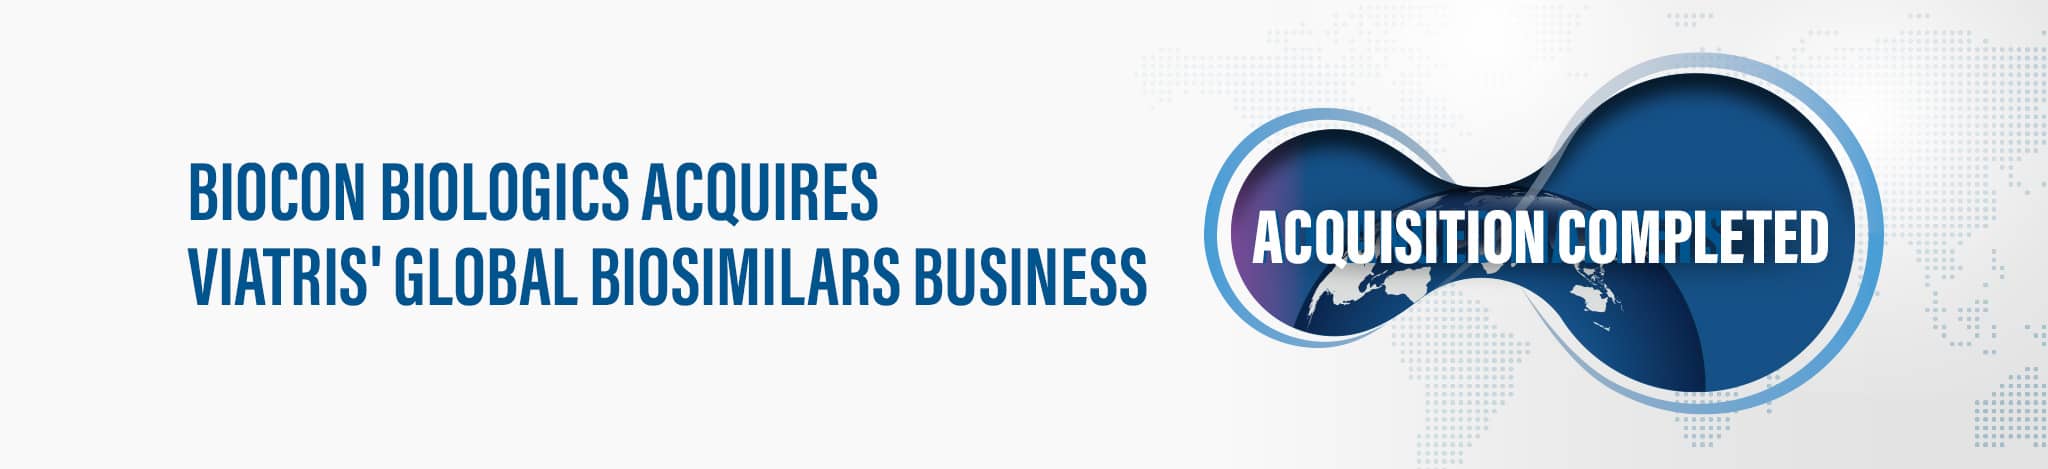 Biocon Biologics Acquires Viatris' Global Biosimilars Business